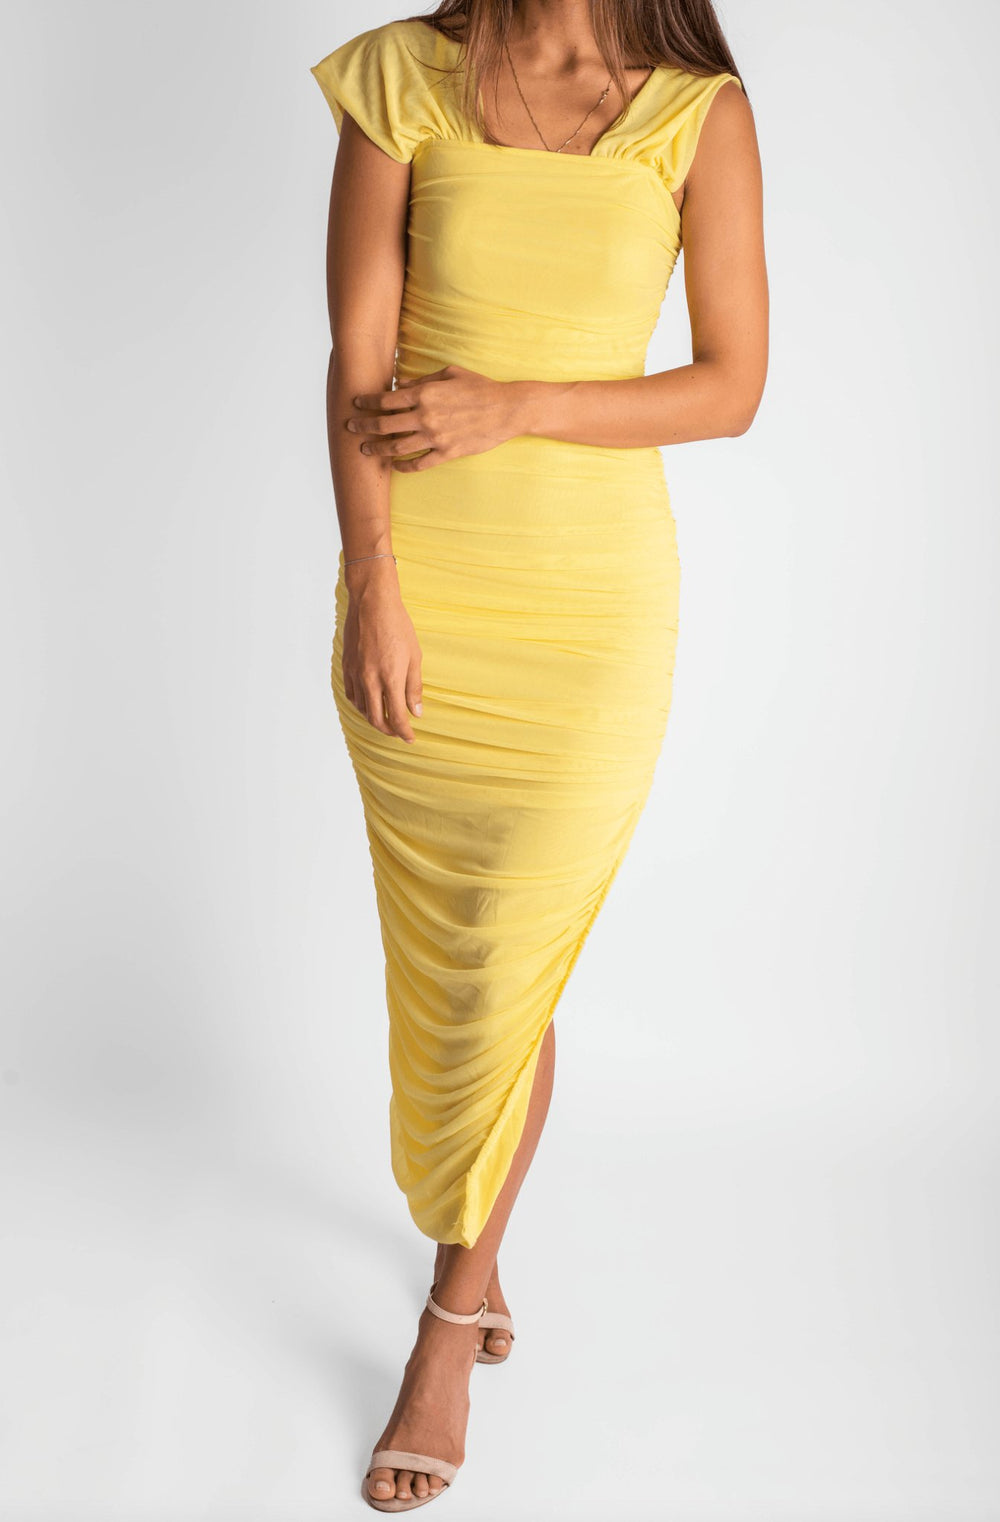 Jolene - amarillo - Lend the Trend renta de vestidos mexico